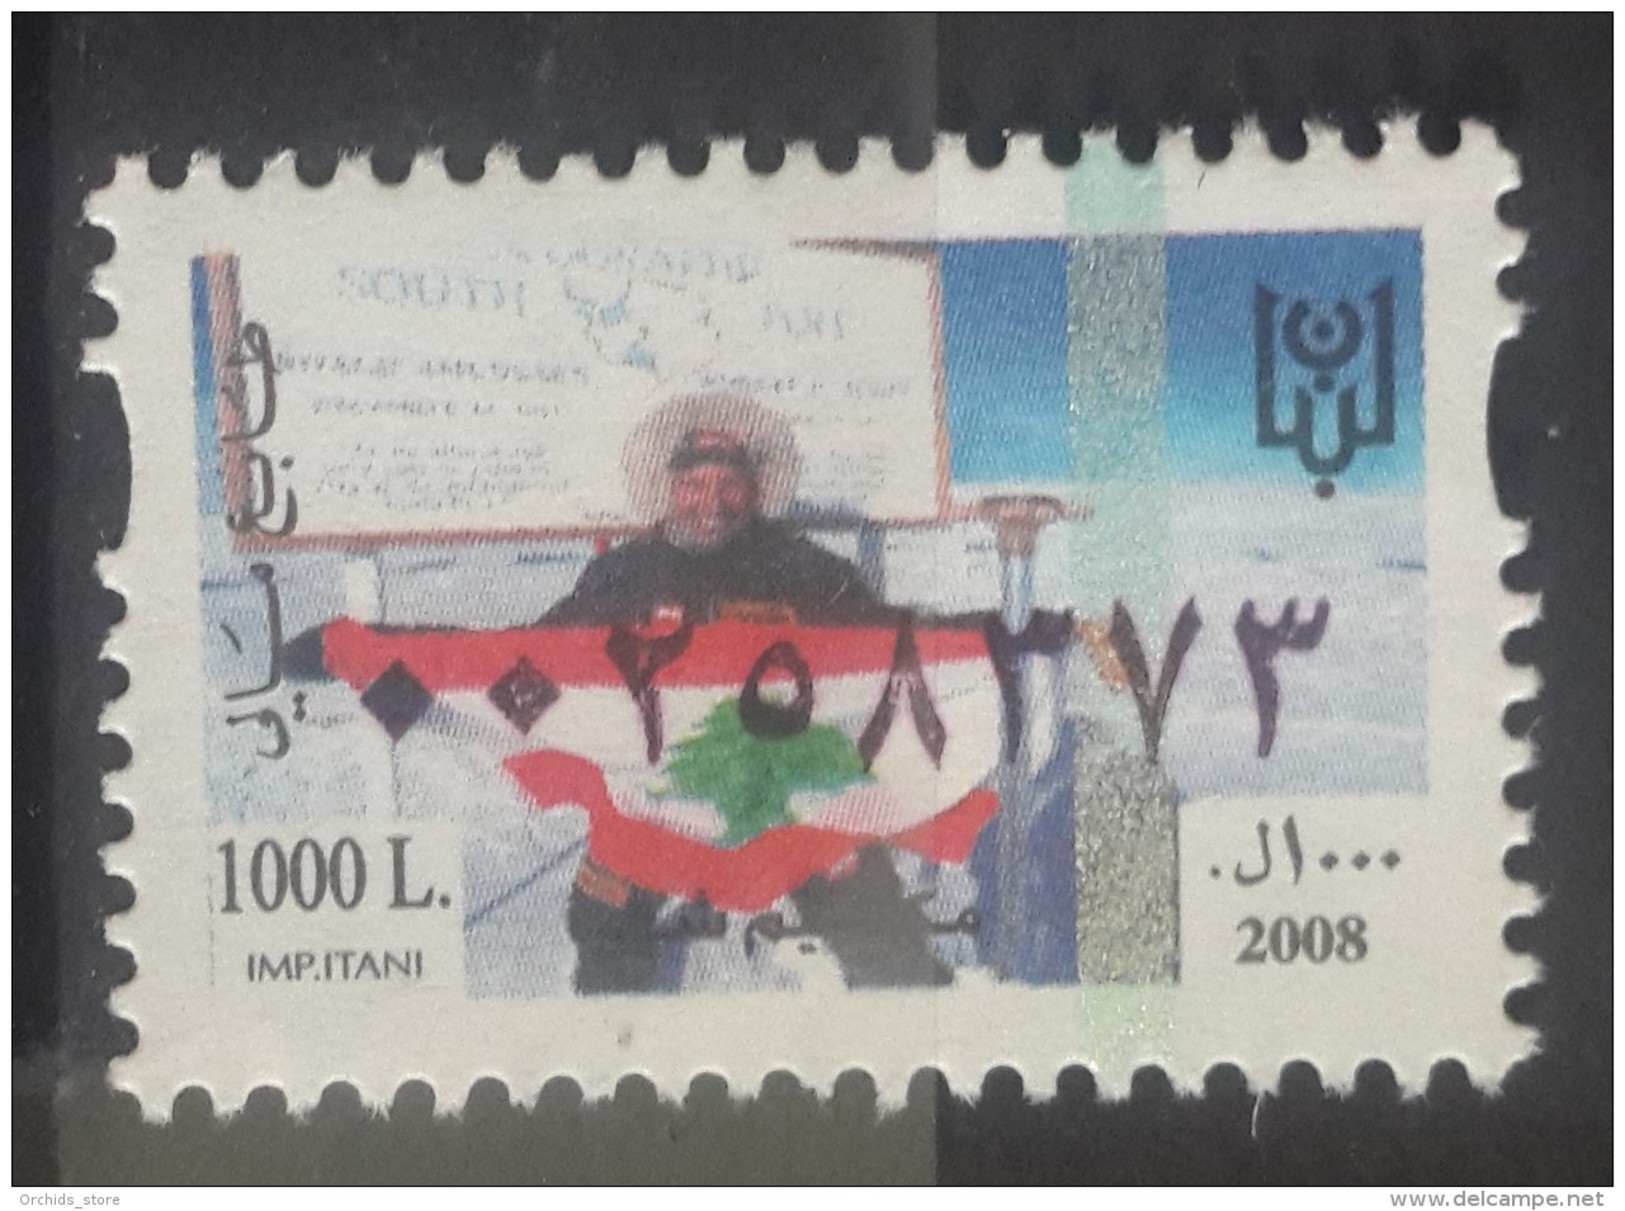 Lebanon 2008 Fiscal Revenue Stamp 1000 L - MNH - Maxime Chaaya @ The North Pole - Libano